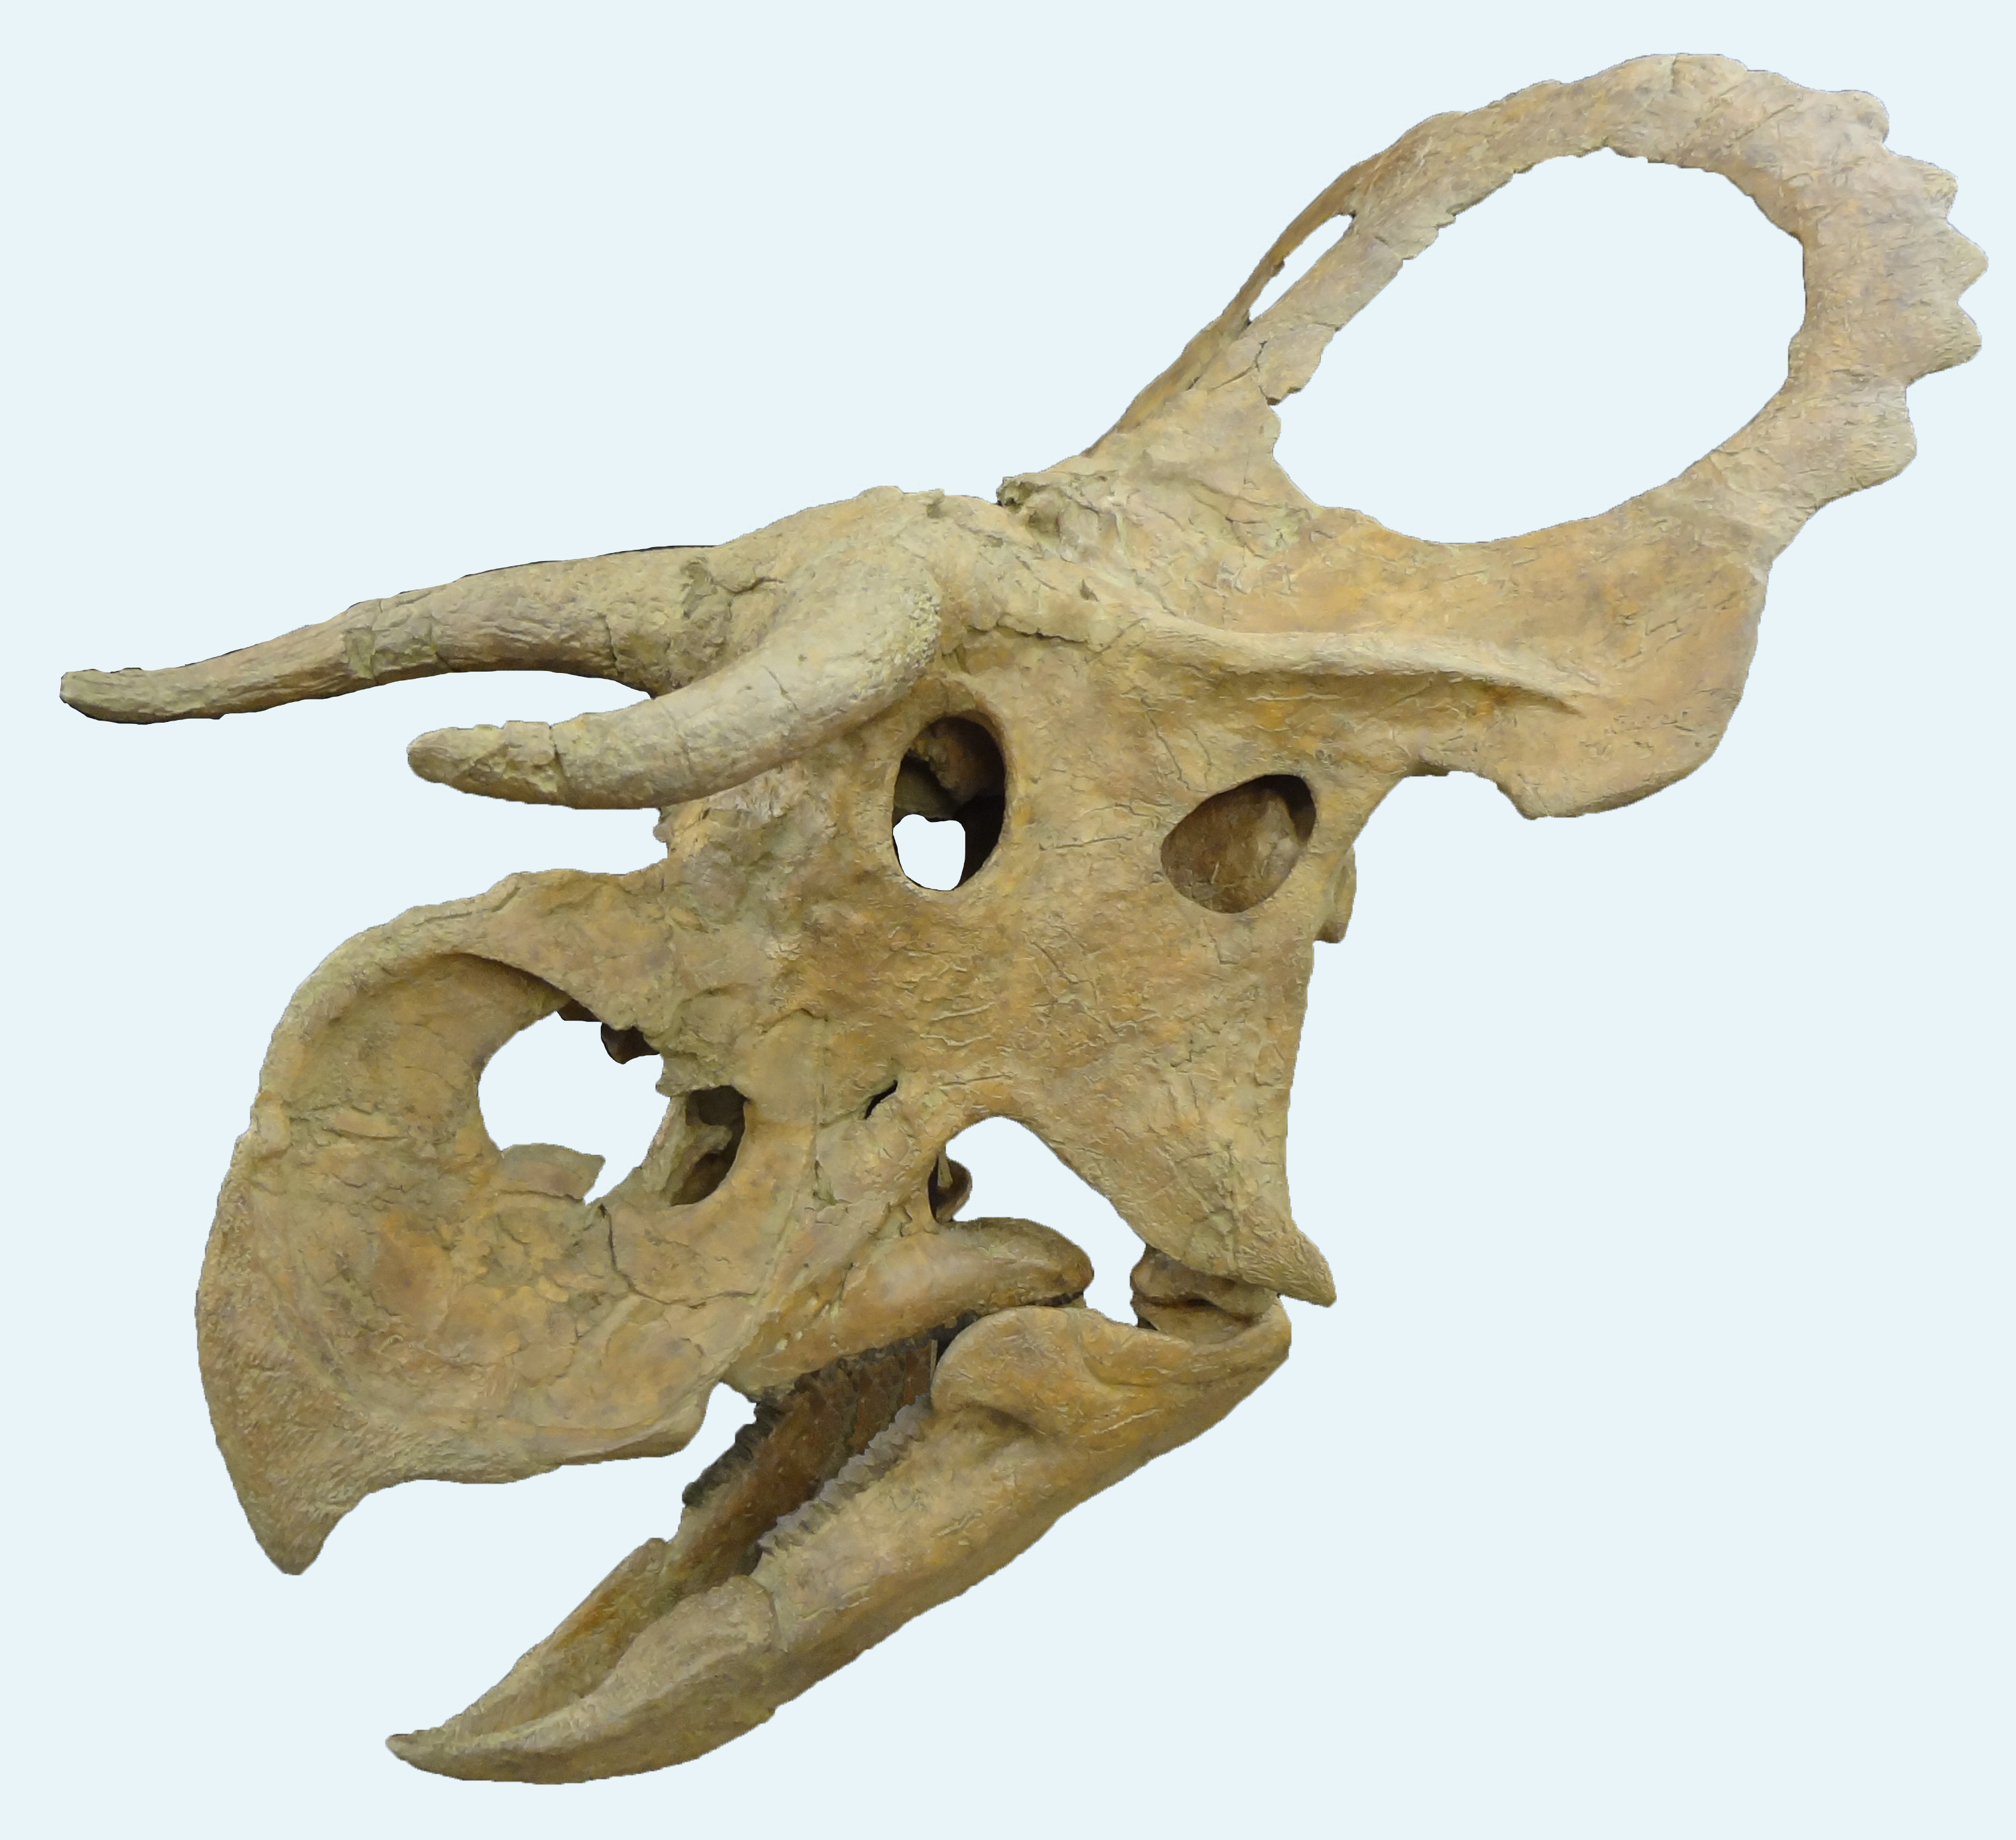 http://dinosaurs.afly.ru/ii/c/nasutoceratops-cherep-1.jpg